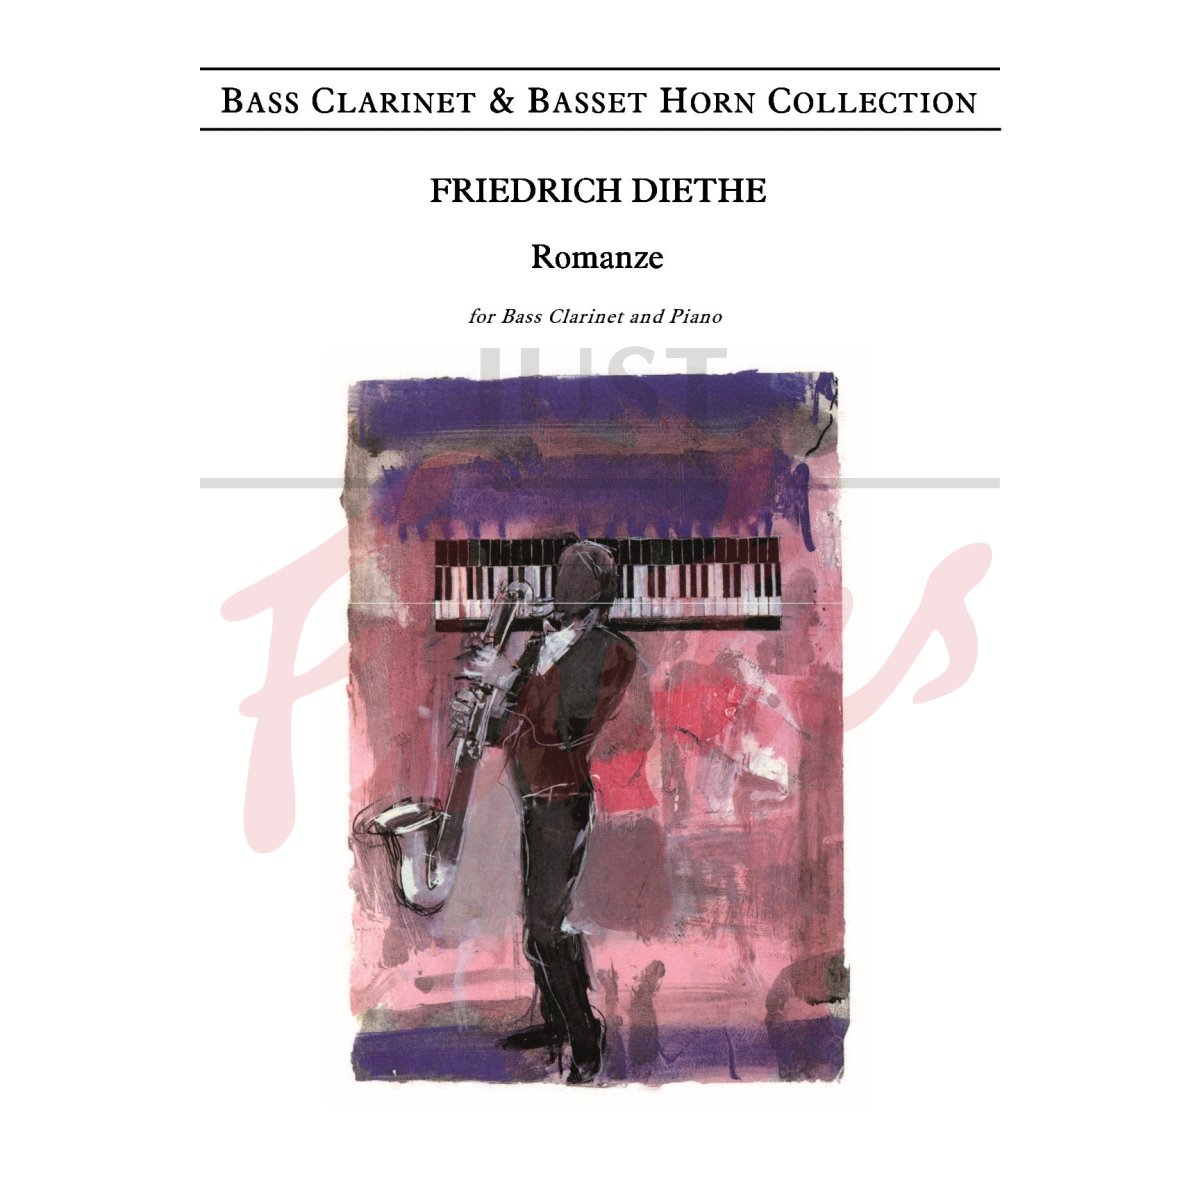 Romanze for Bass Clarinet and Piano